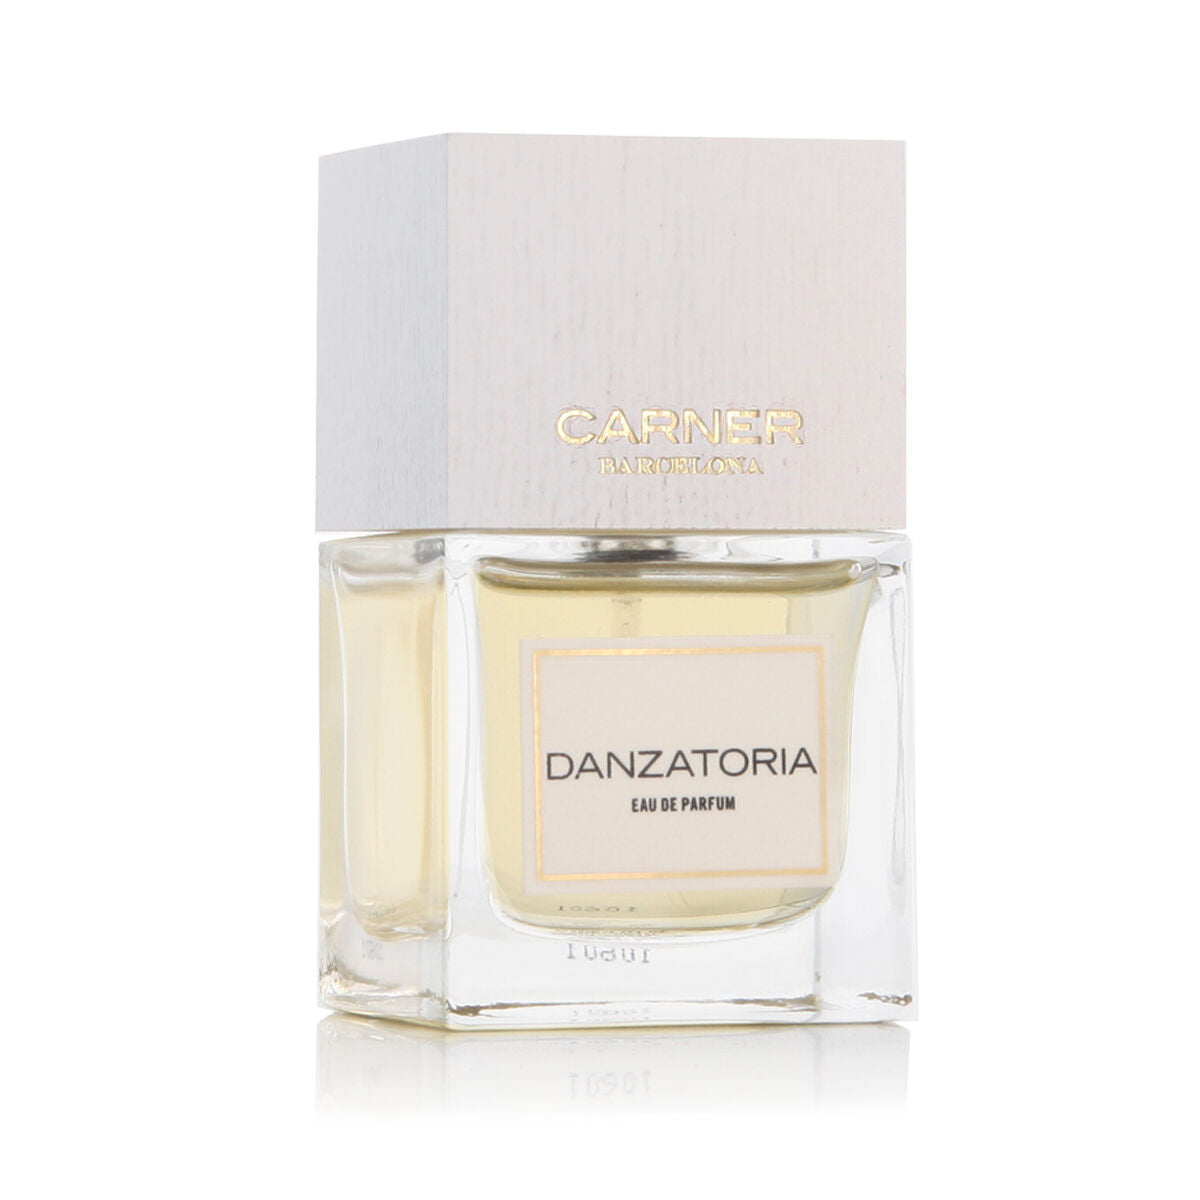 Uniseks Parfum Carner Barcelona EDP Danzatoria 50 ml